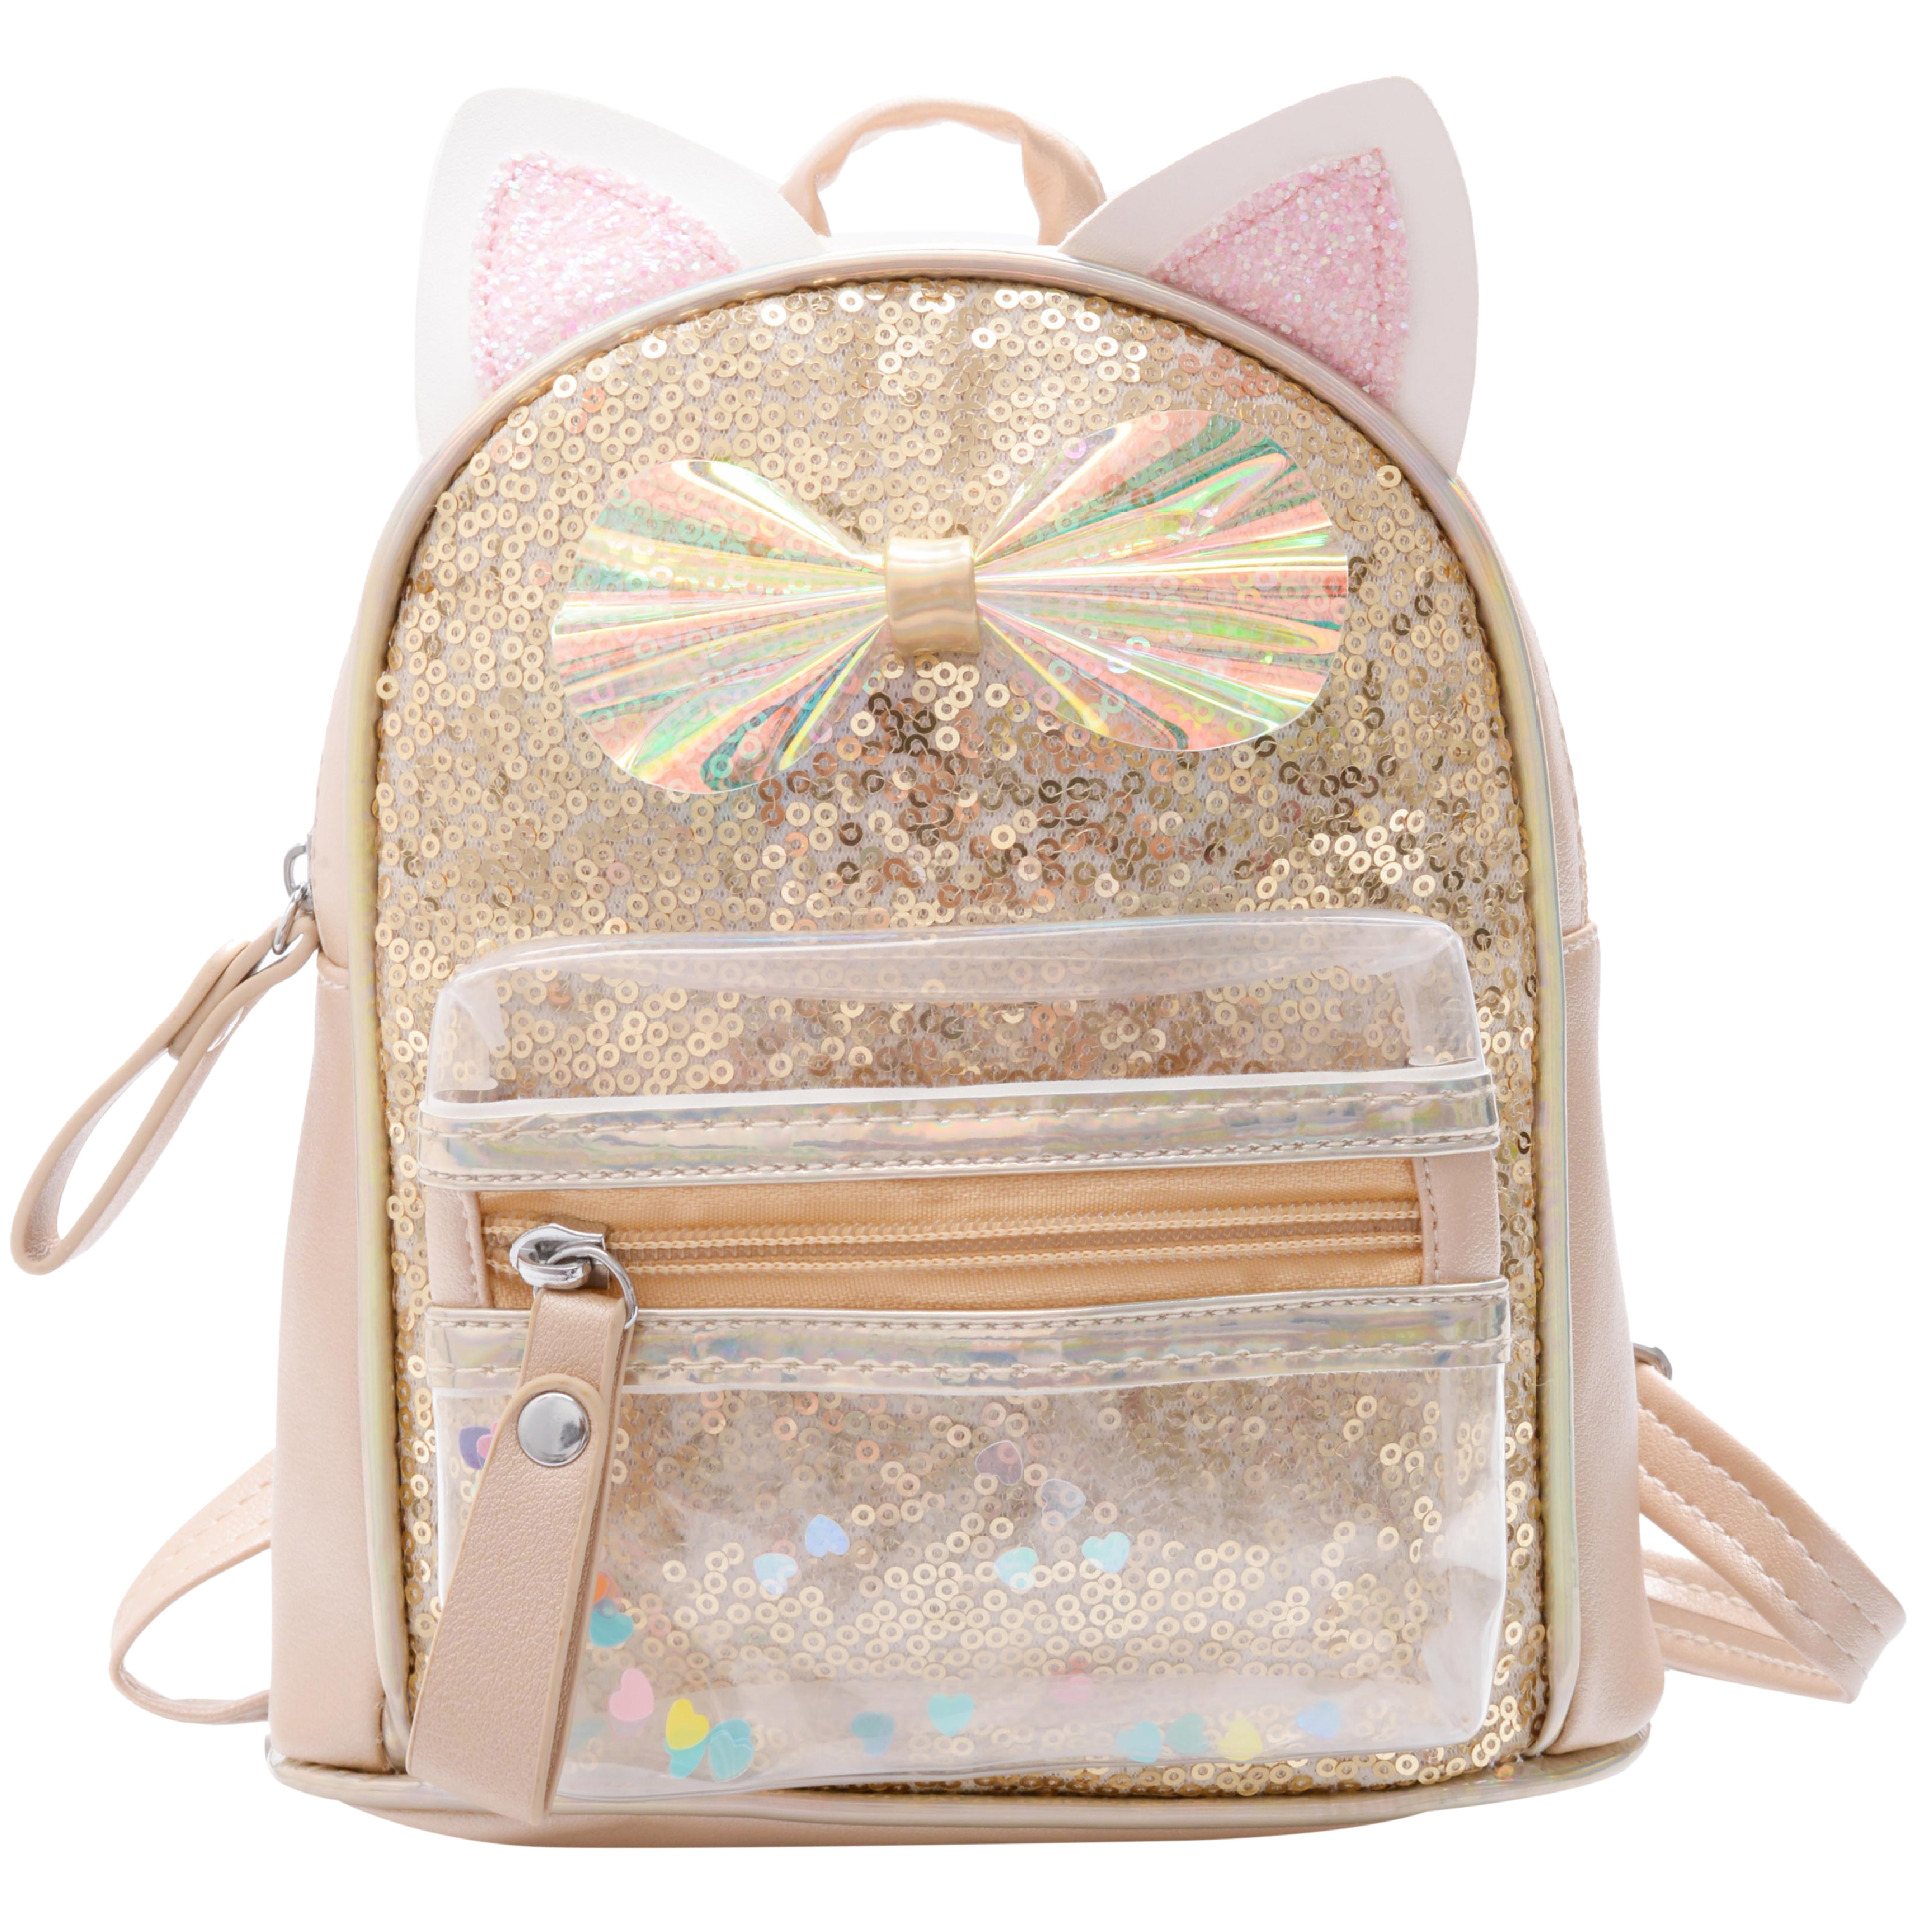 Children's School Bag Sequin Backpack Colorful Shiny Girl Baby Cute Cartoon Stylish Princess Bag Small Bookbag